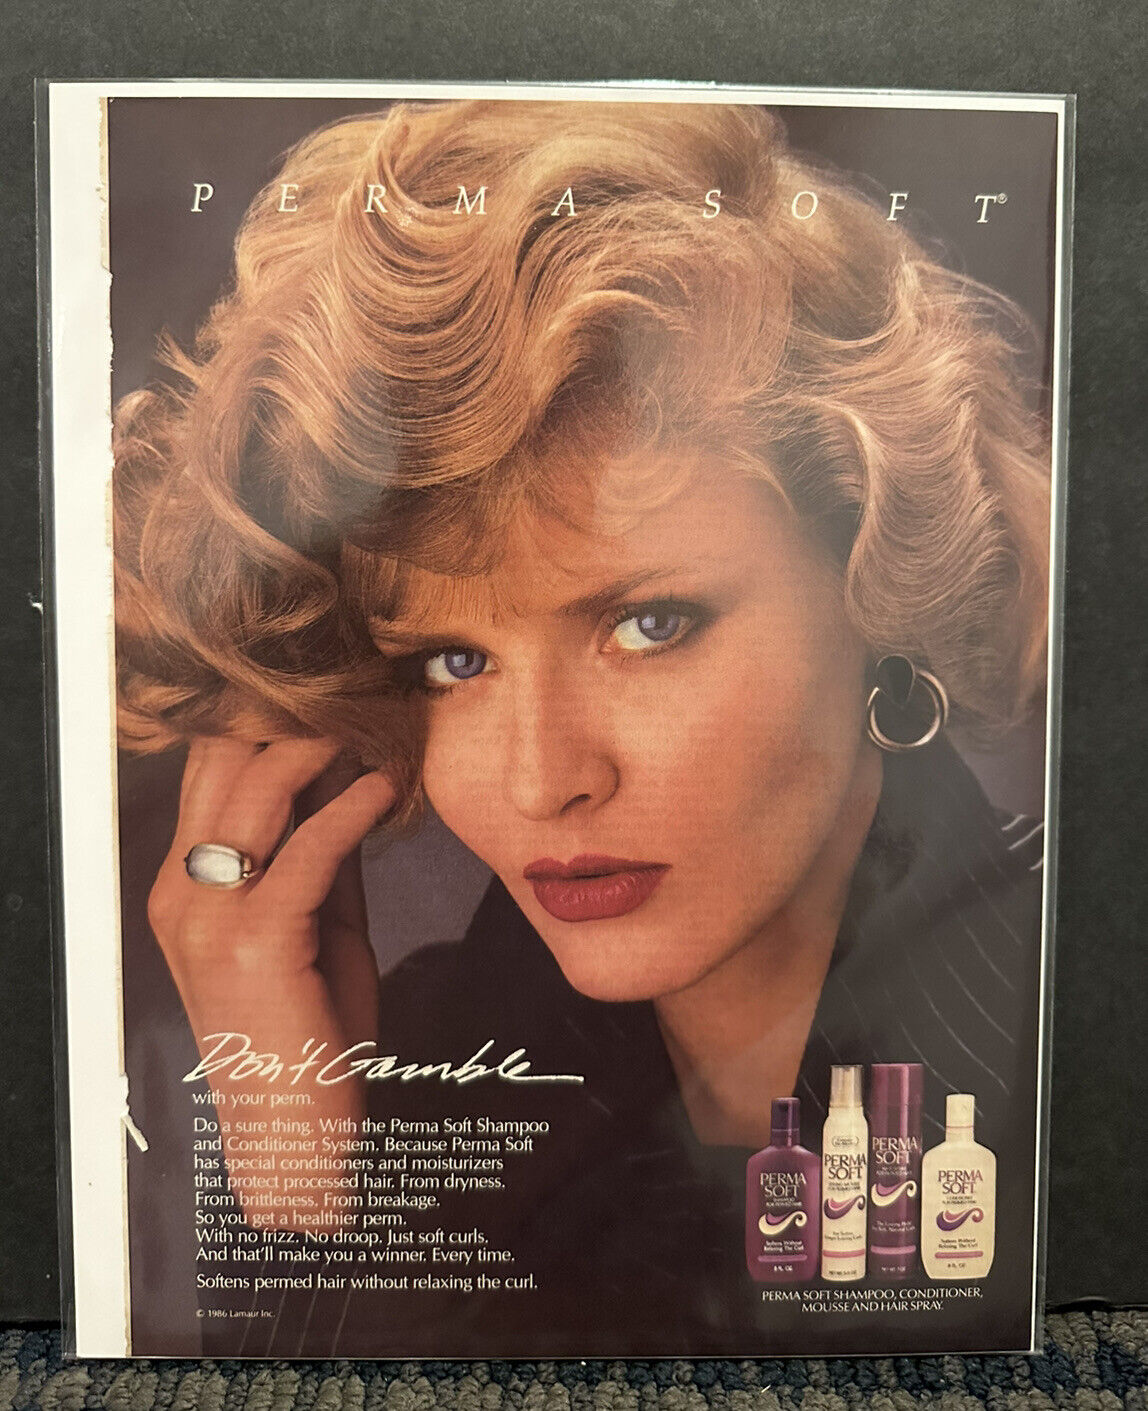 1986 Perma Soft Print Ad (A1)